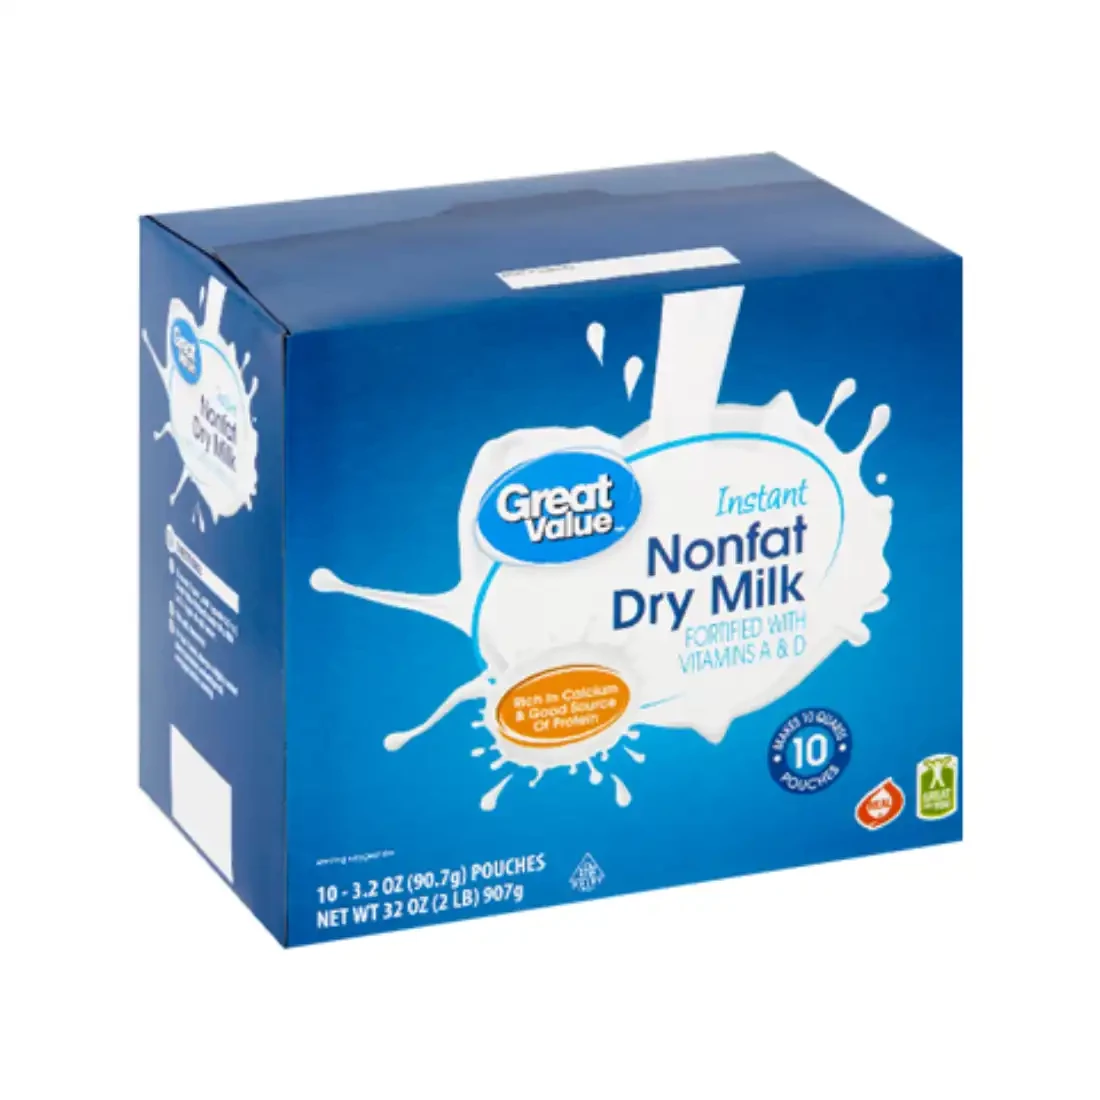 custom-design-hemp-milk-packaging-boxes